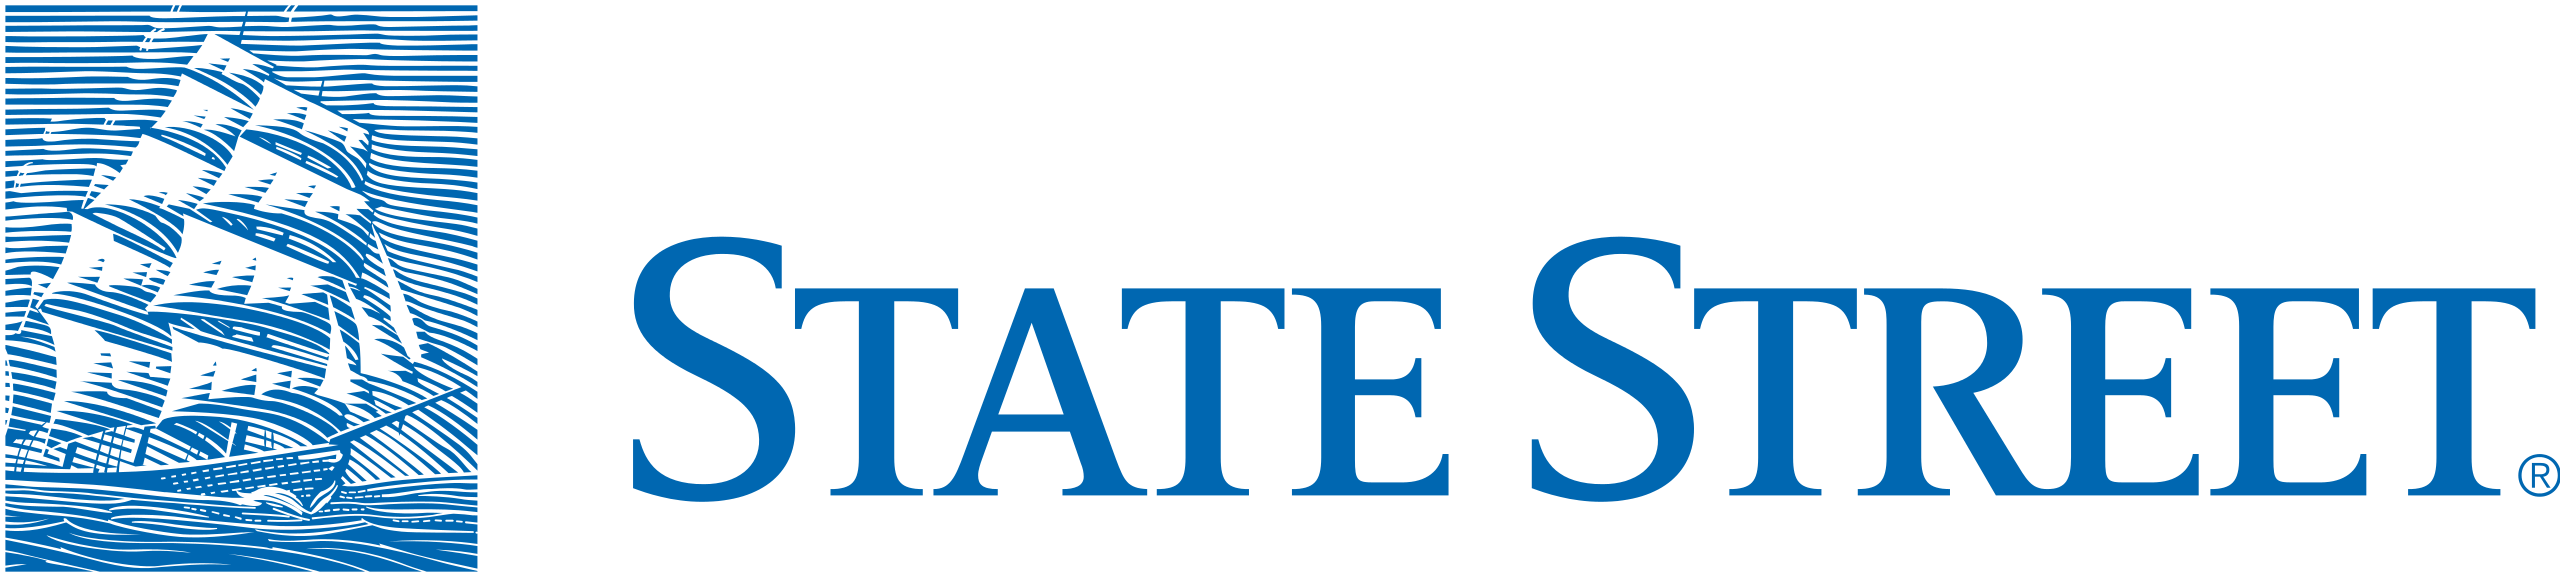 State Street Corporation logo.svg